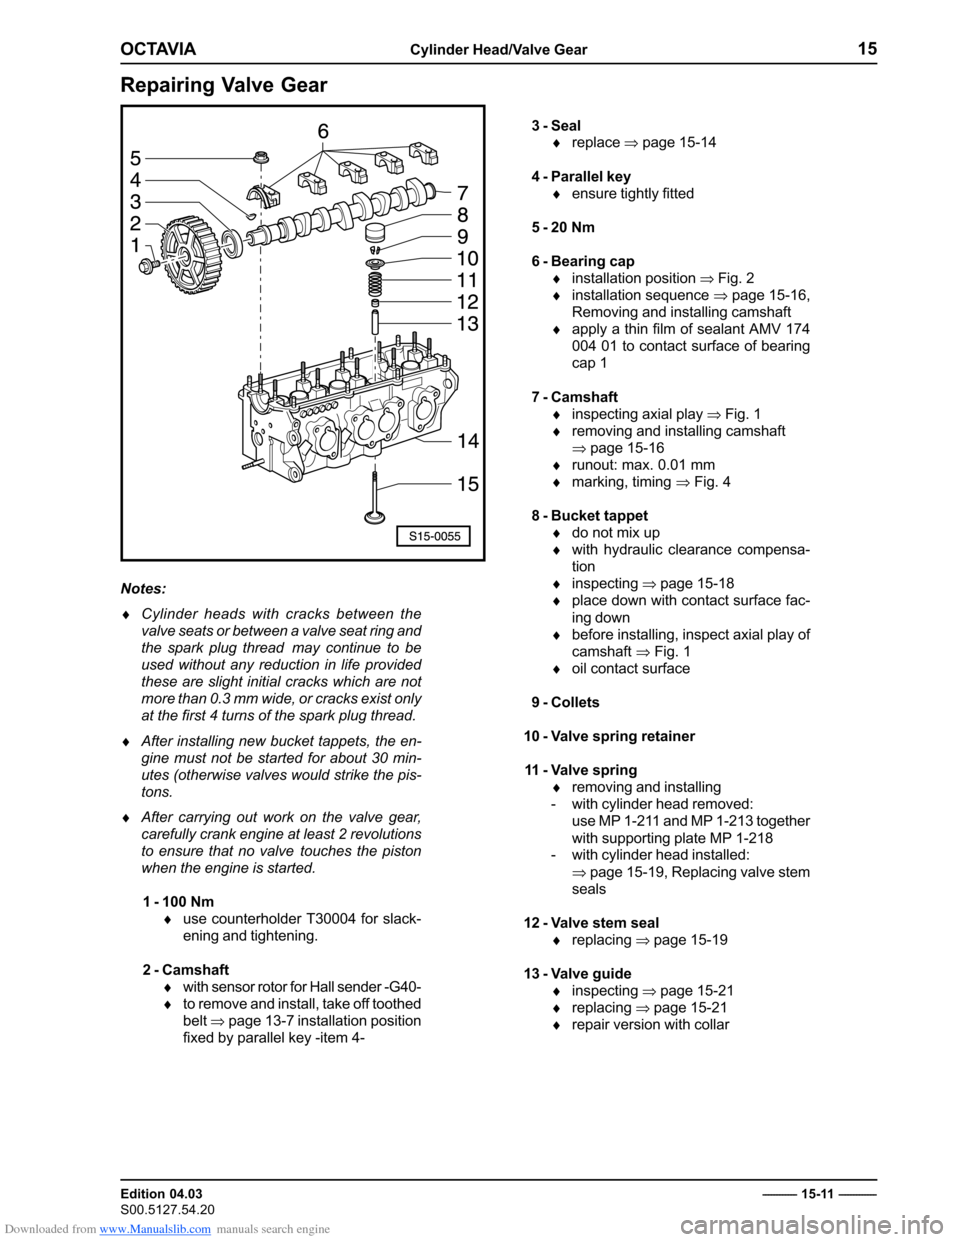 SKODA OCTAVIA 2000 1.G / (1U) 2.0 85kw Engine Repair Manual Downloaded from www.Manualslib.com manuals search engine ���������������������������������
������������� 
��������������
��������������������
������
� ��������� ������ ����� ������� �������� ��� 
����